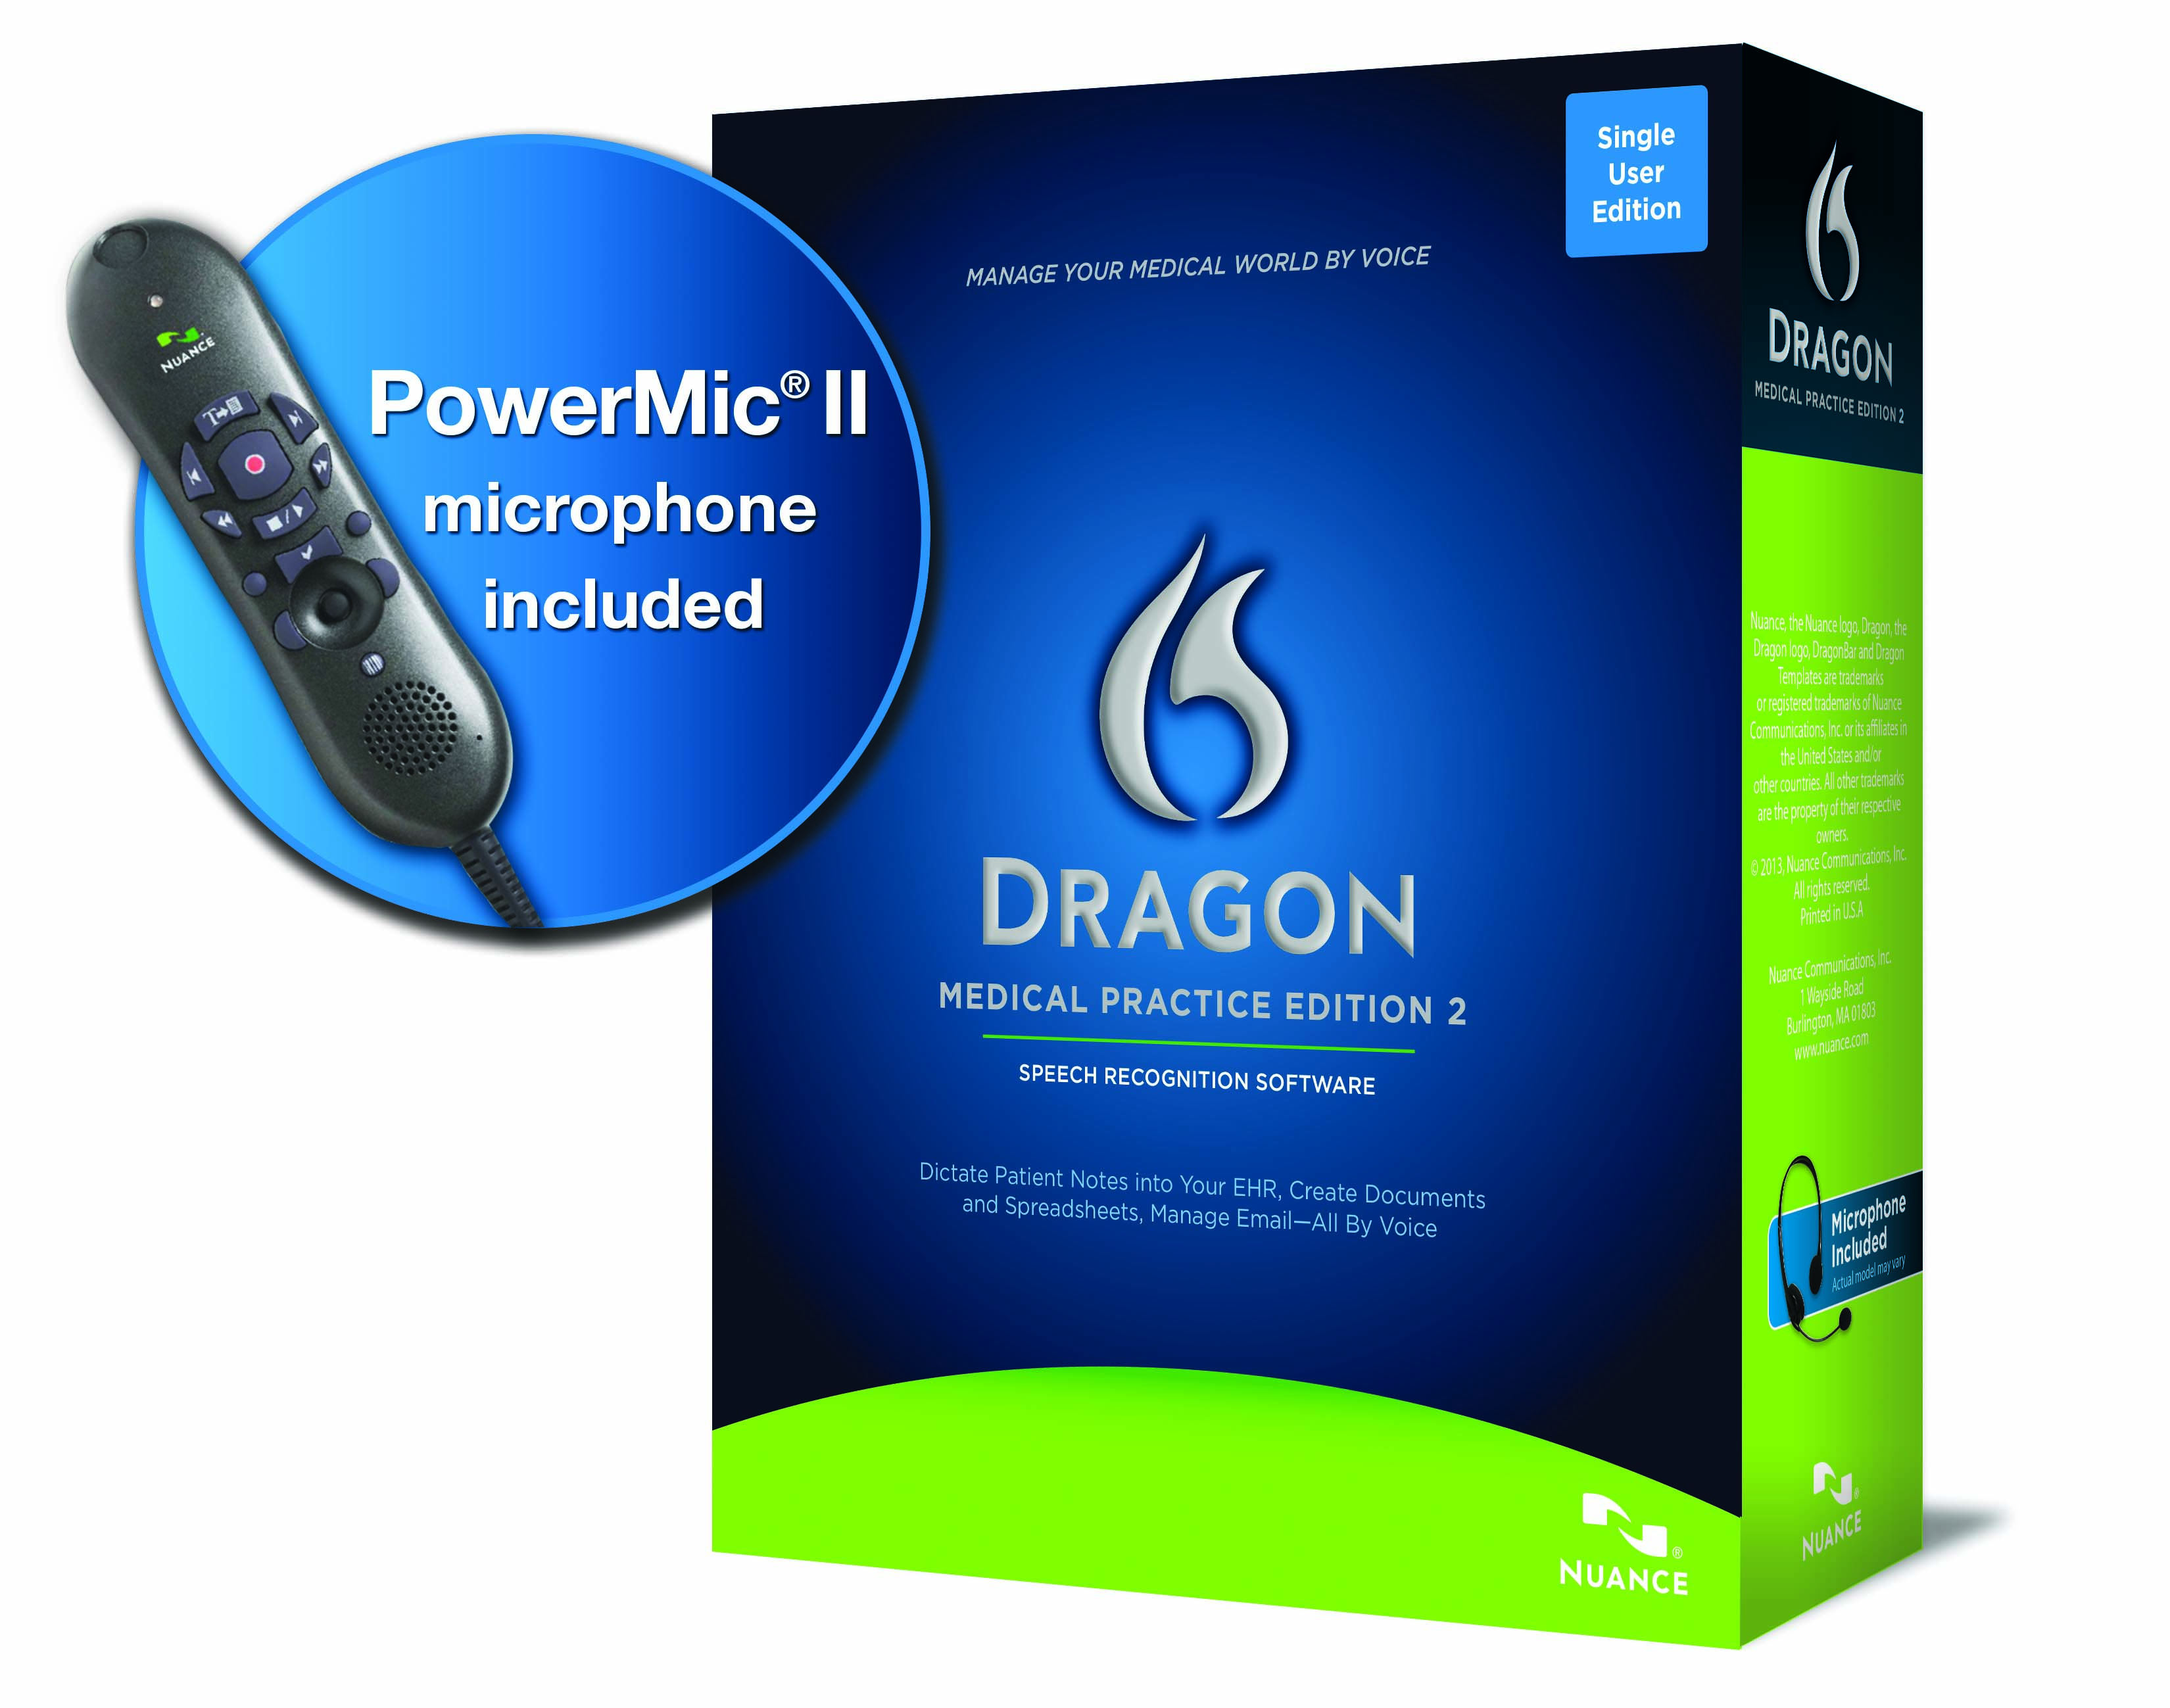 Dragon Medical Practice Edition 2 with PowerMic II